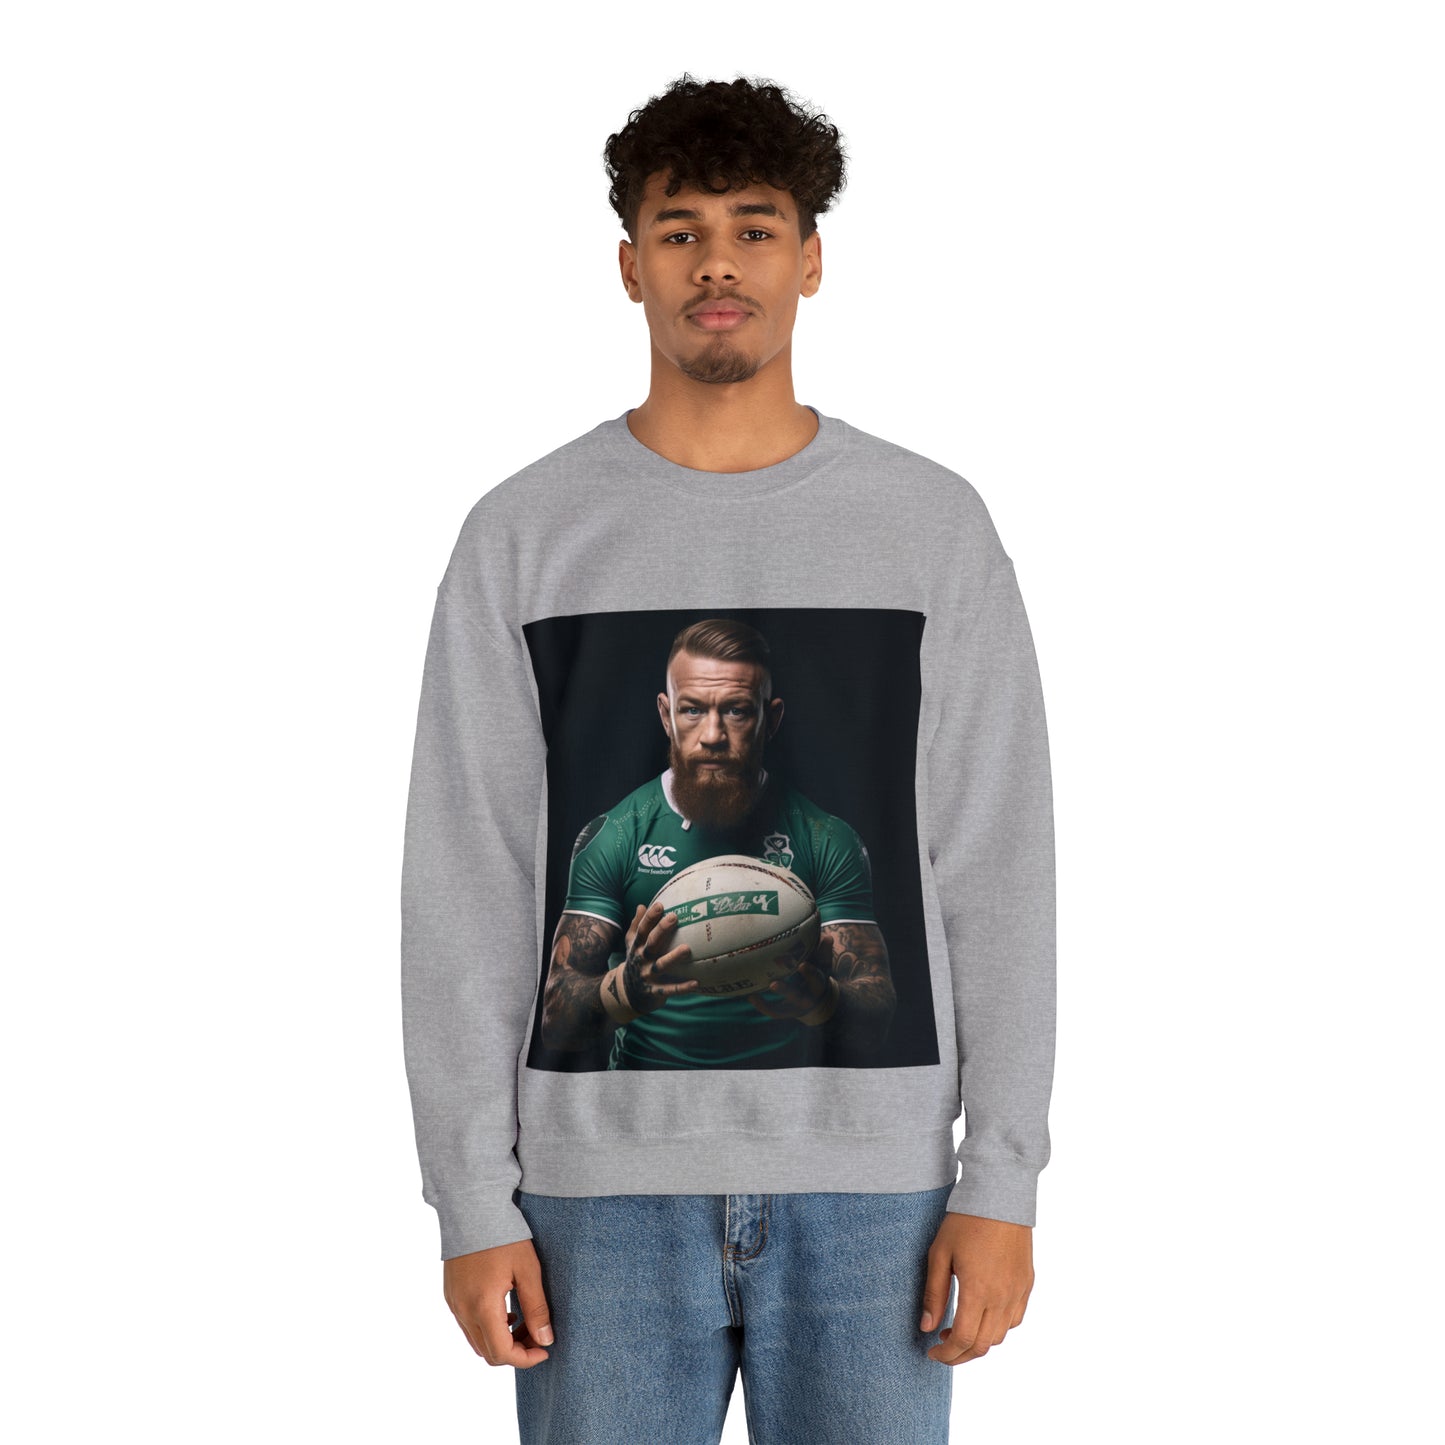 Serious Conor - light sweatshirts